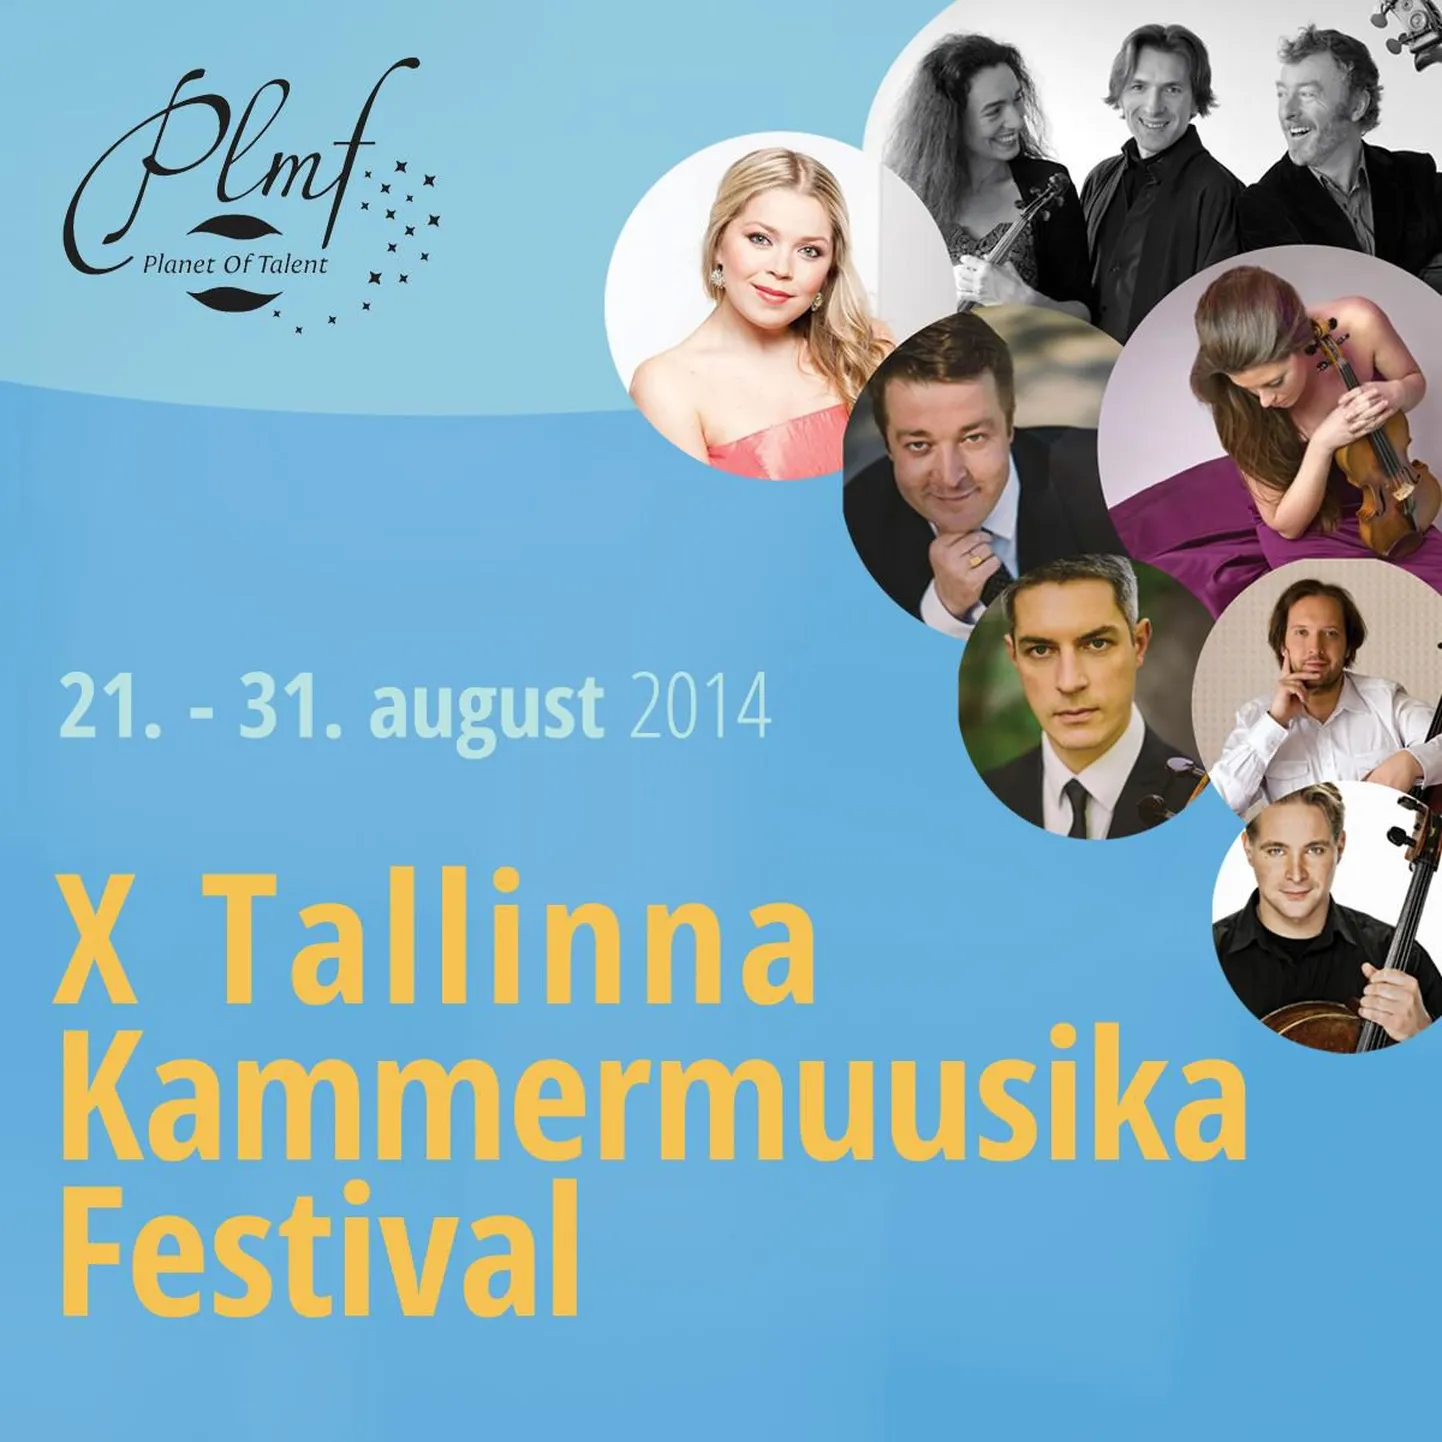 X Tallinna Kammermuusika Festival